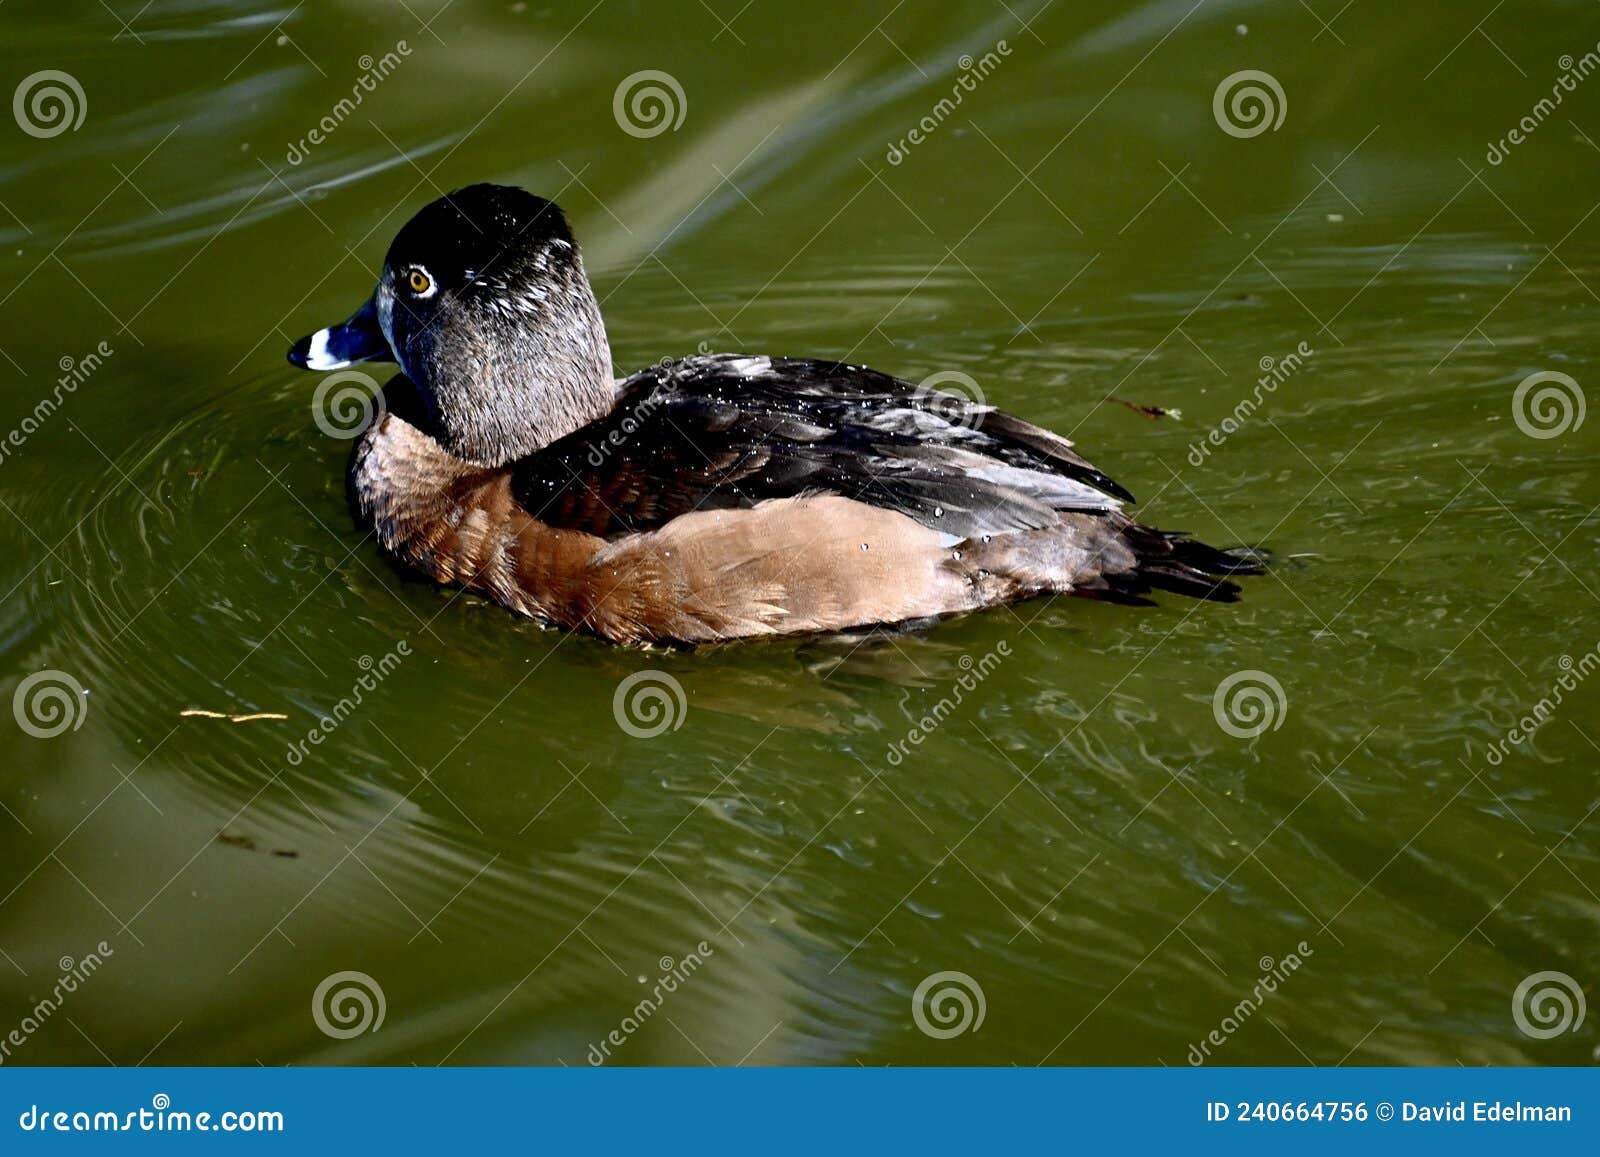 File:Female Ring-necked Duck Aythya collaris.jpg - Wikimedia Commons